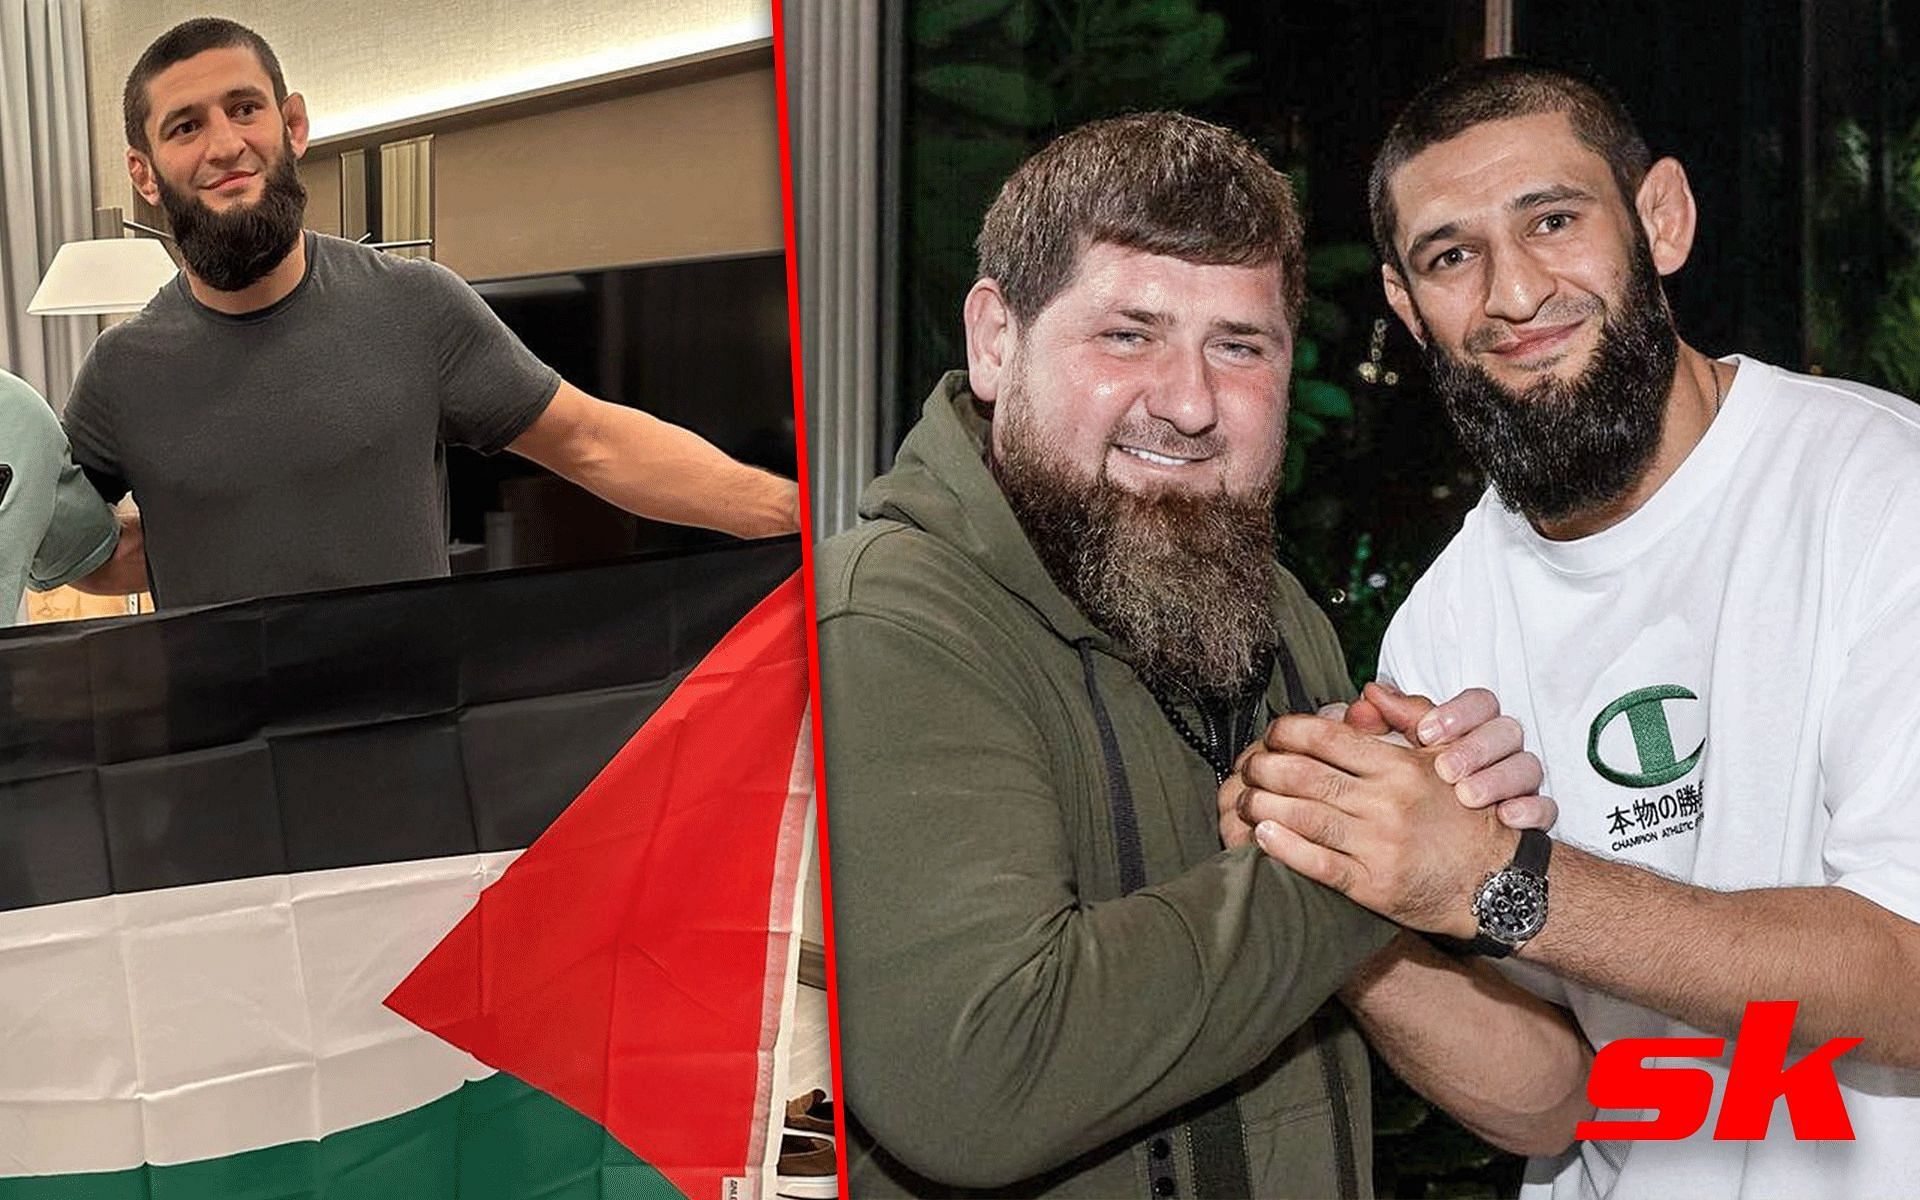 Islam Makhachev with Ramzan Kadyrov [Image credits: @khamzat_chimaev on Instagram]